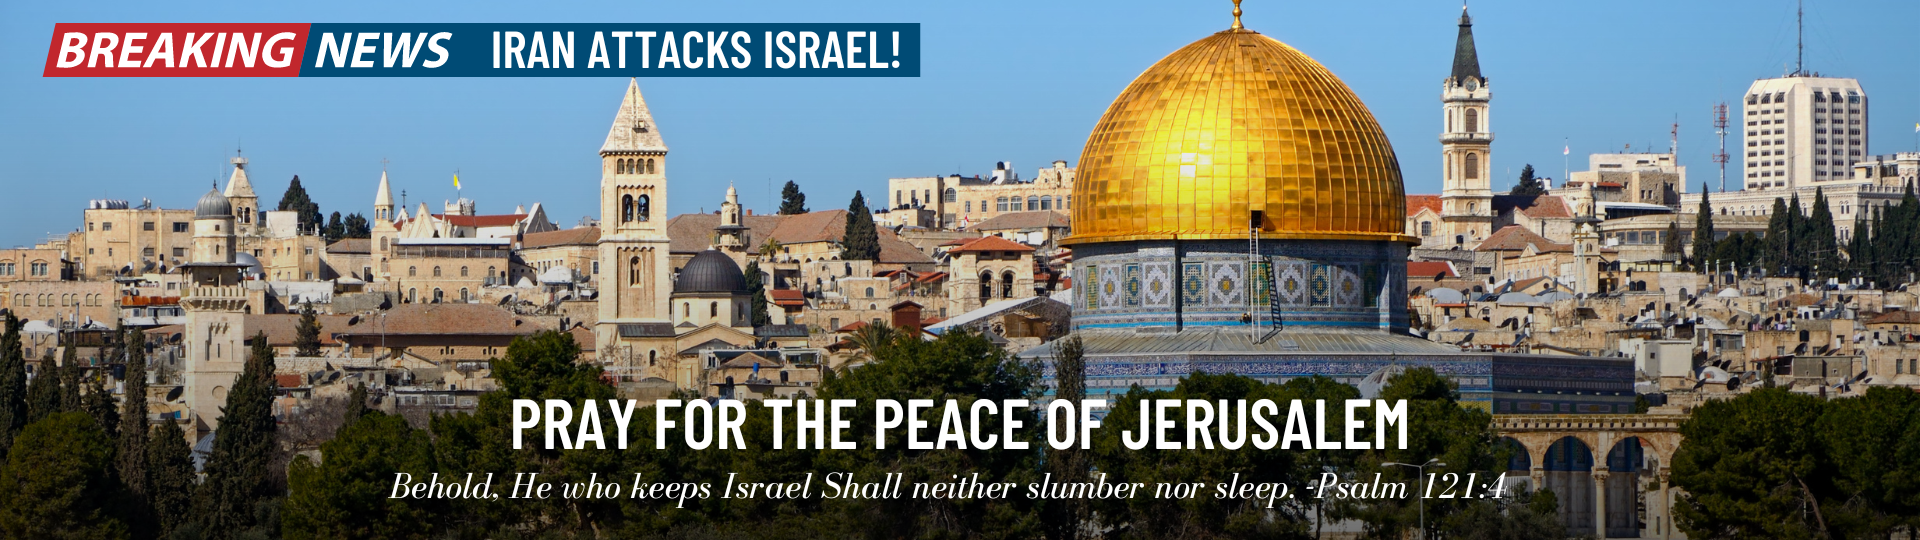 Peace for Jerusalem